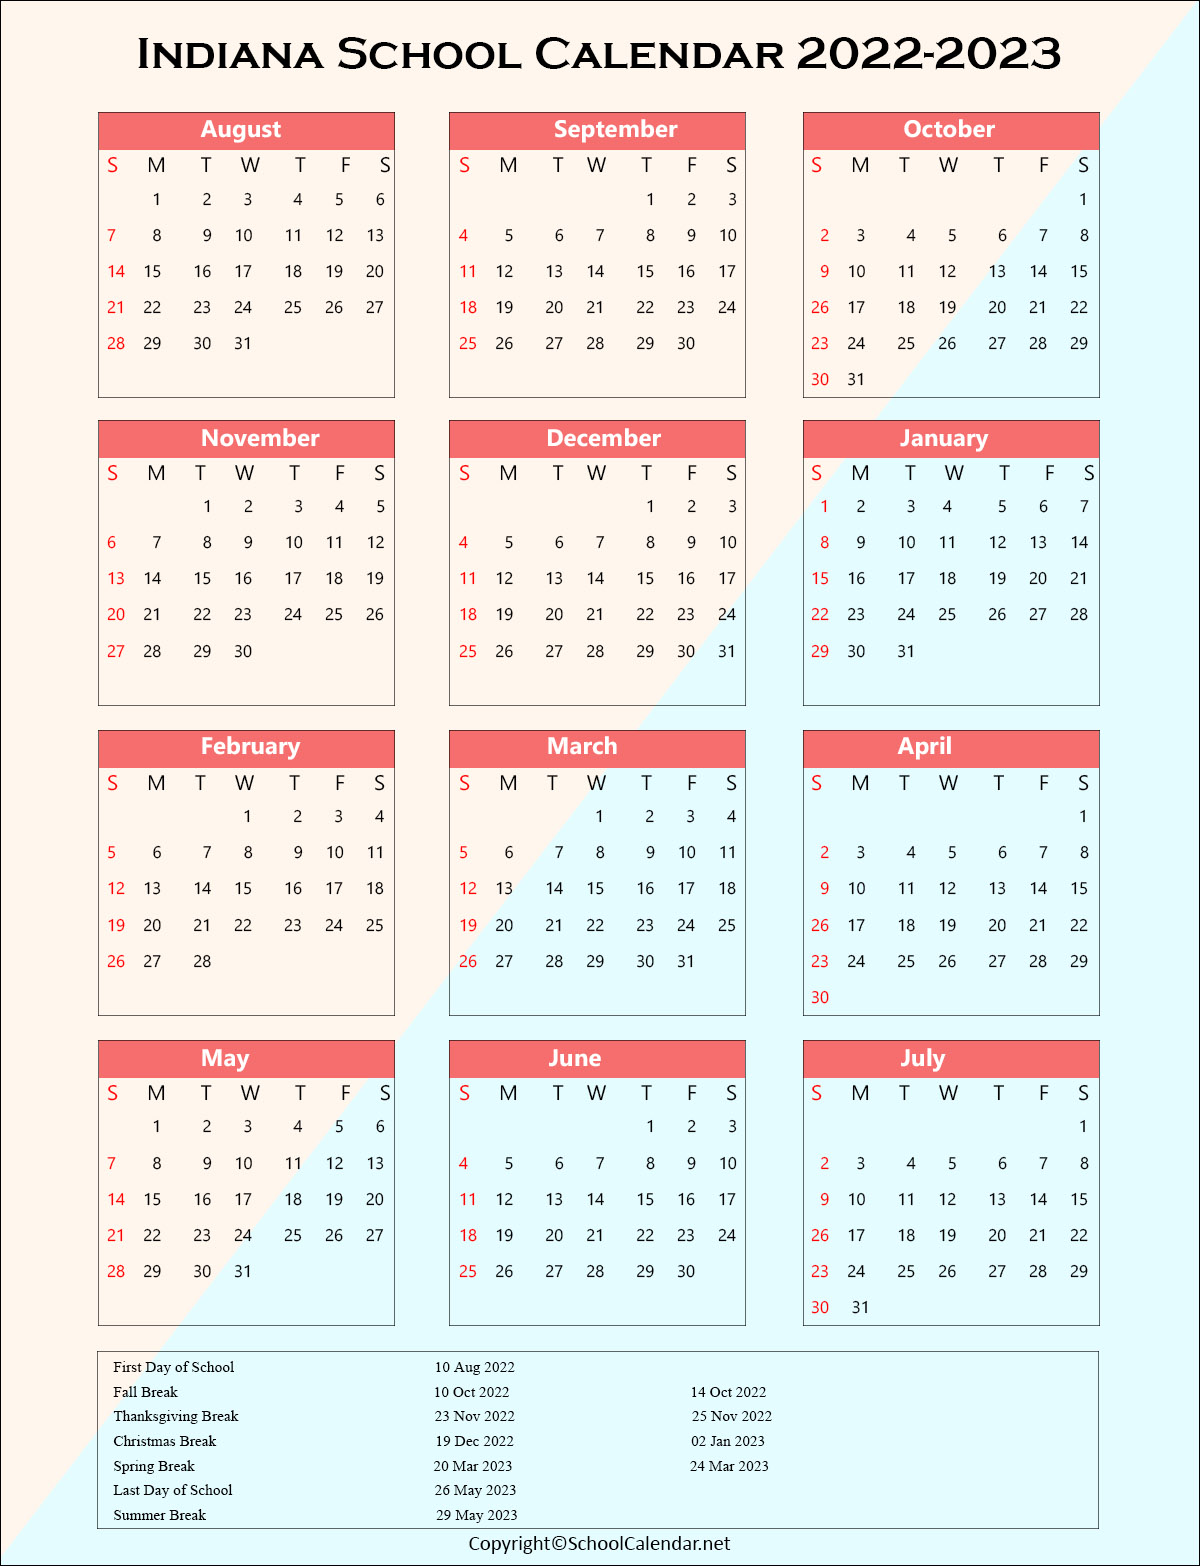 Indiana School Holiday Calendar 2022